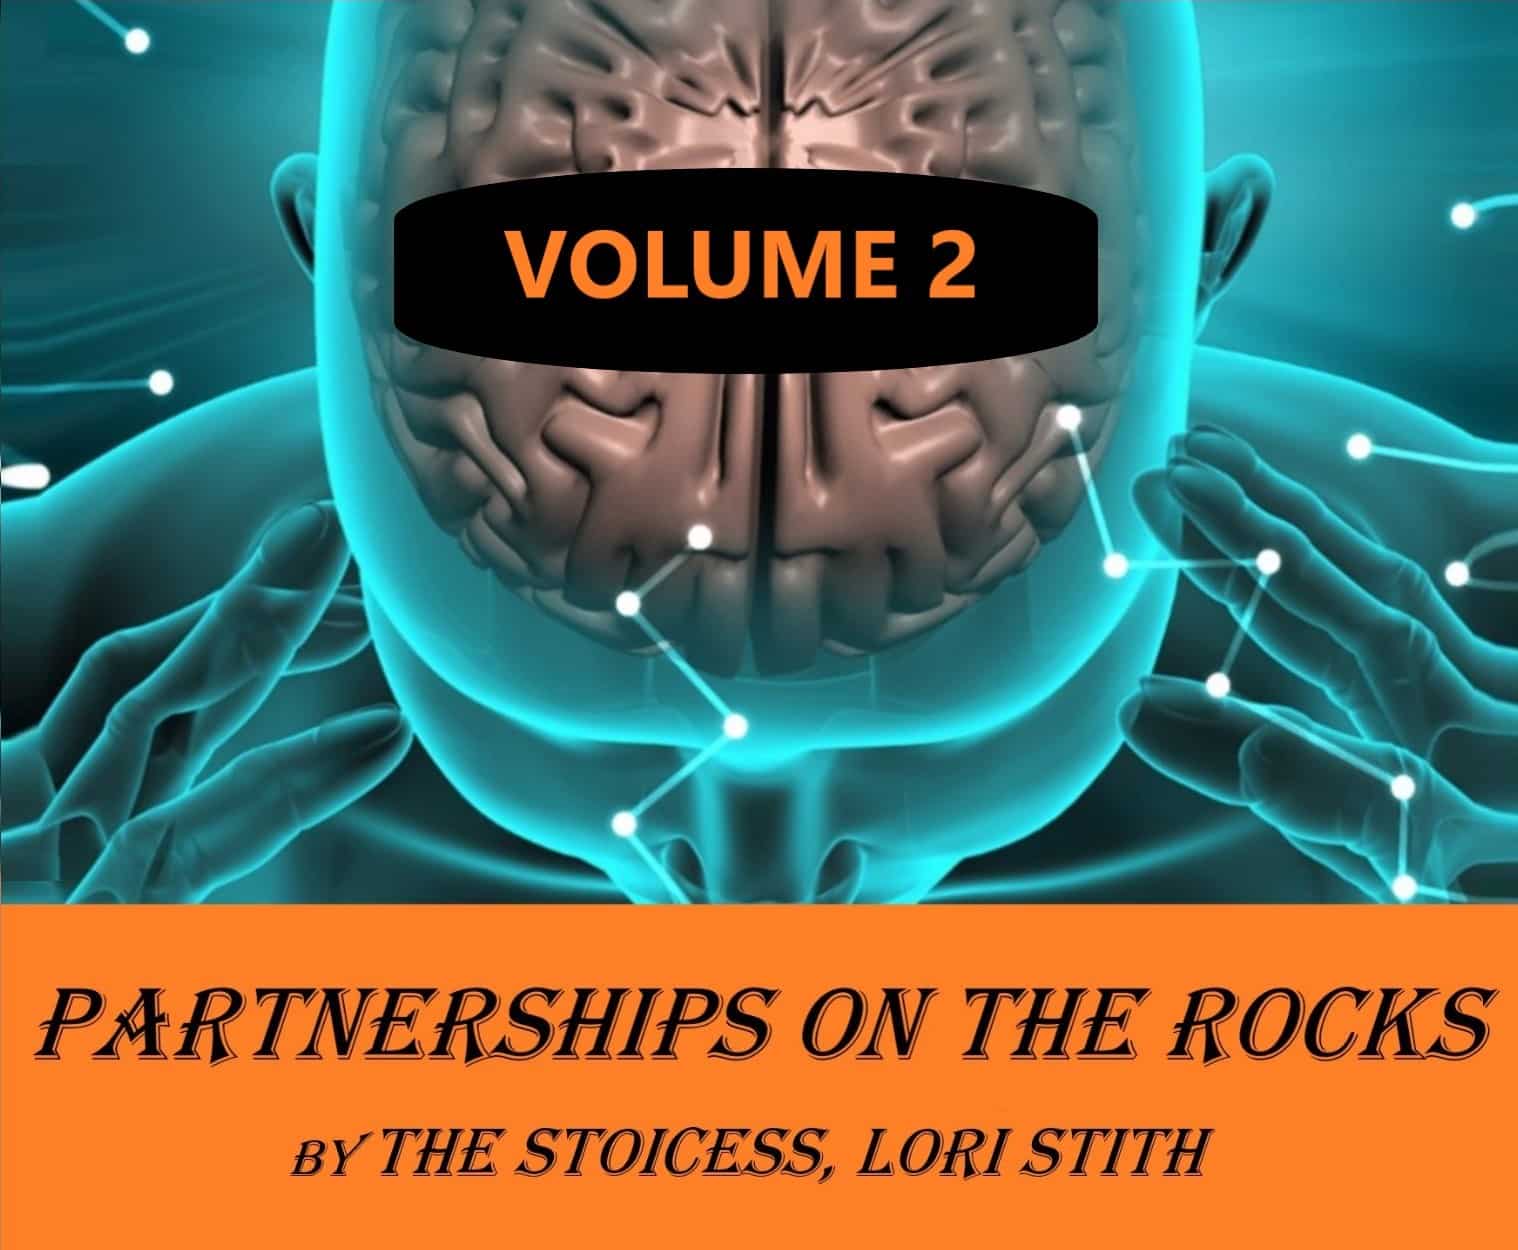 “Partnerships on the Rocks: Vol 2